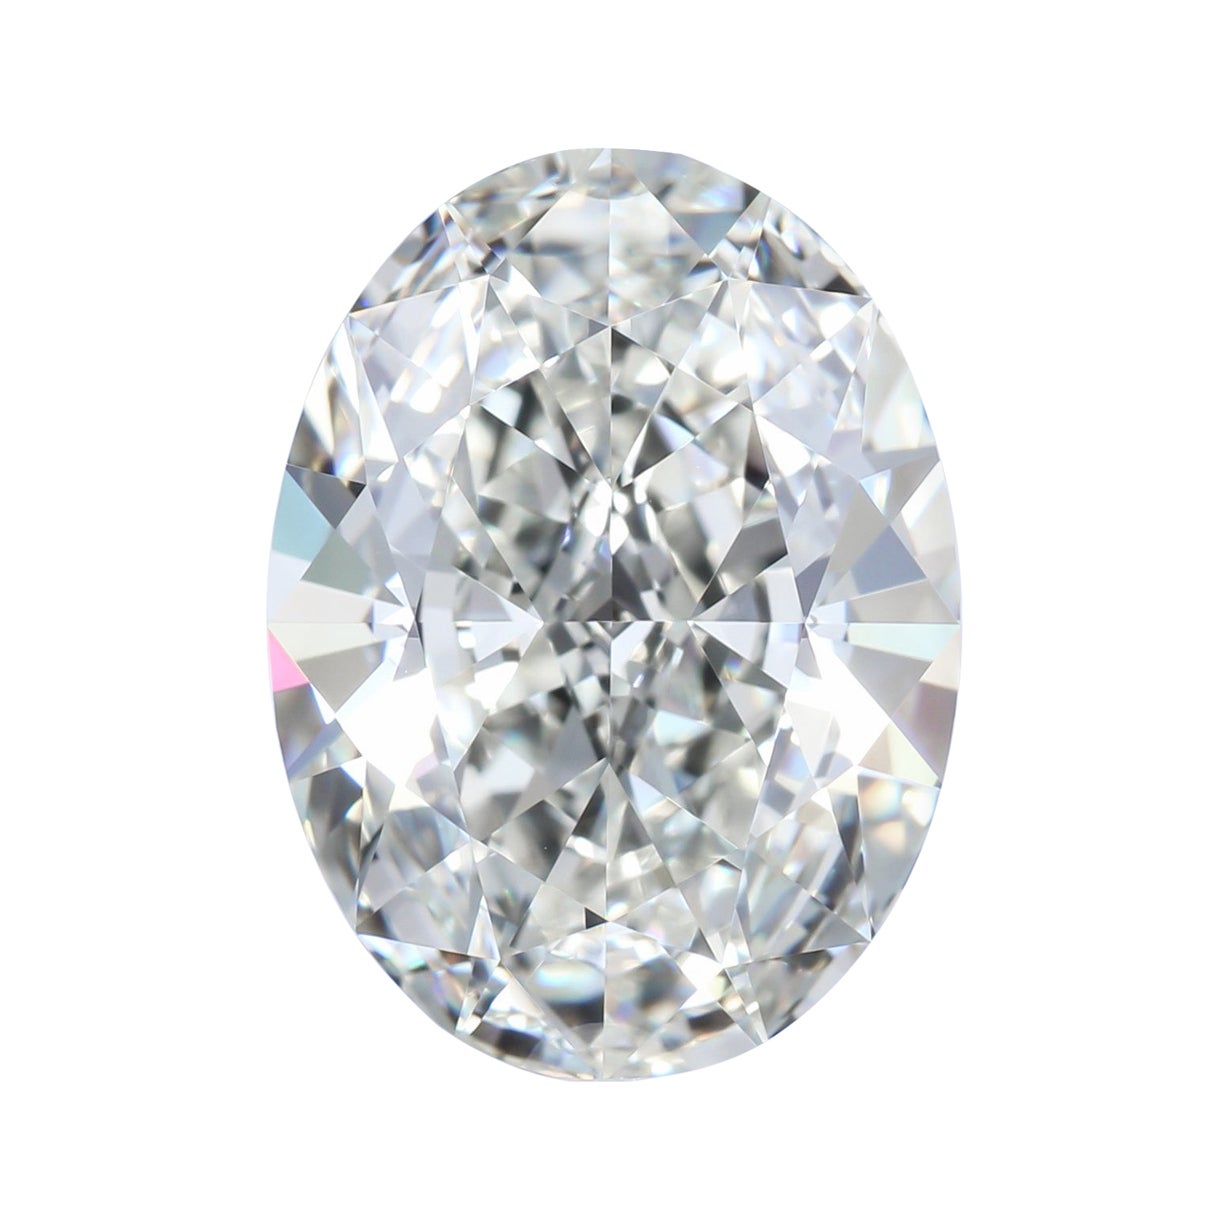 Alexander GIA Certified 5.52 Carat K VVS1 Oval Cut Diamond